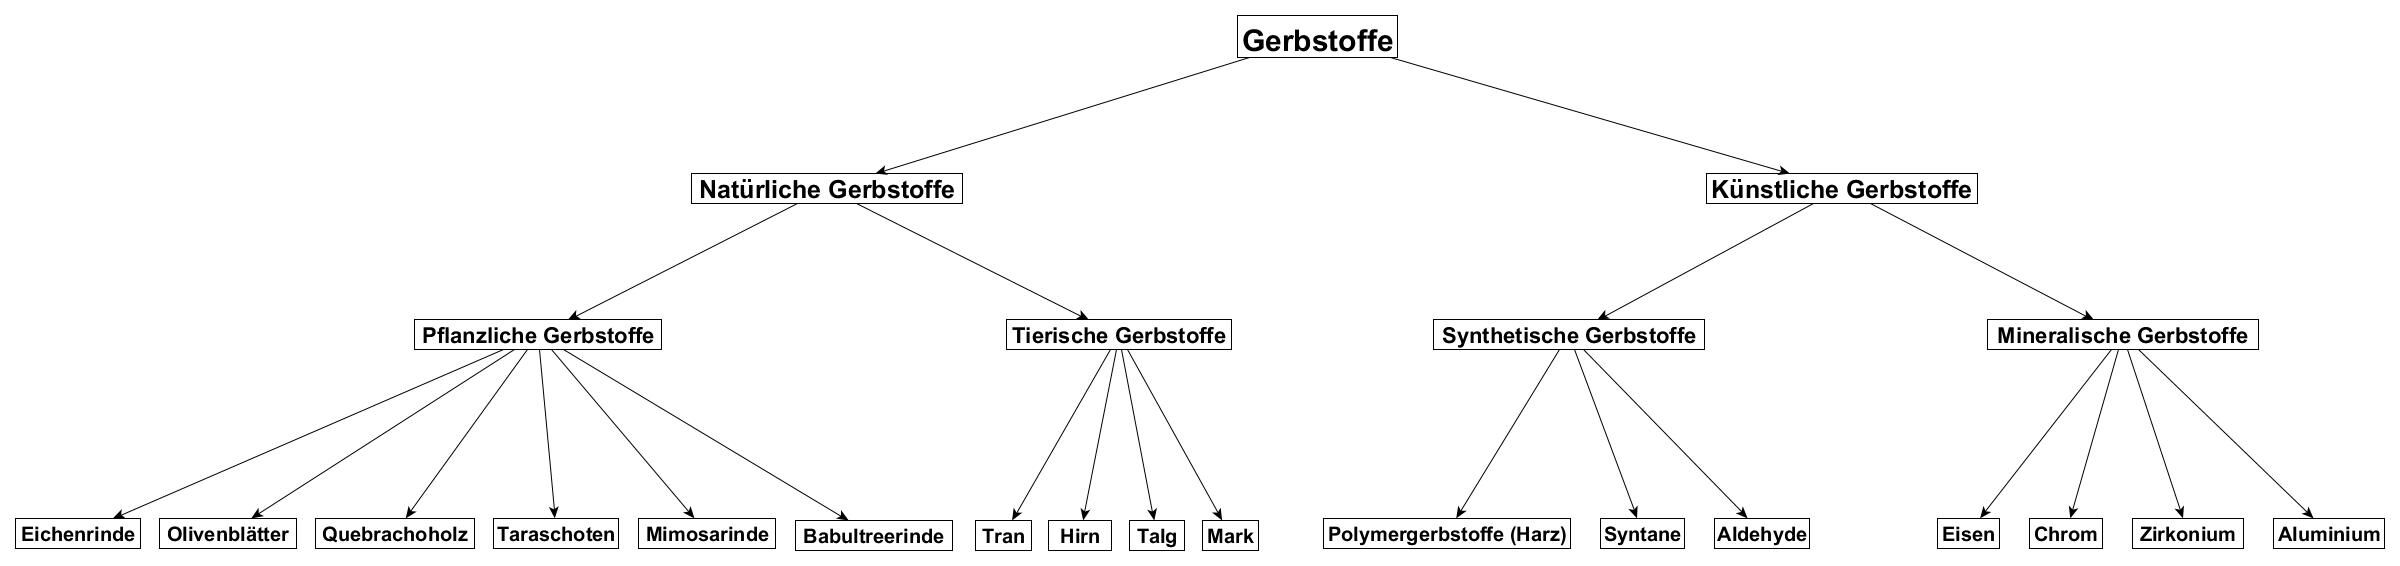 Gerbstoffe-Gusti-Leder5c18ccfb1cff8